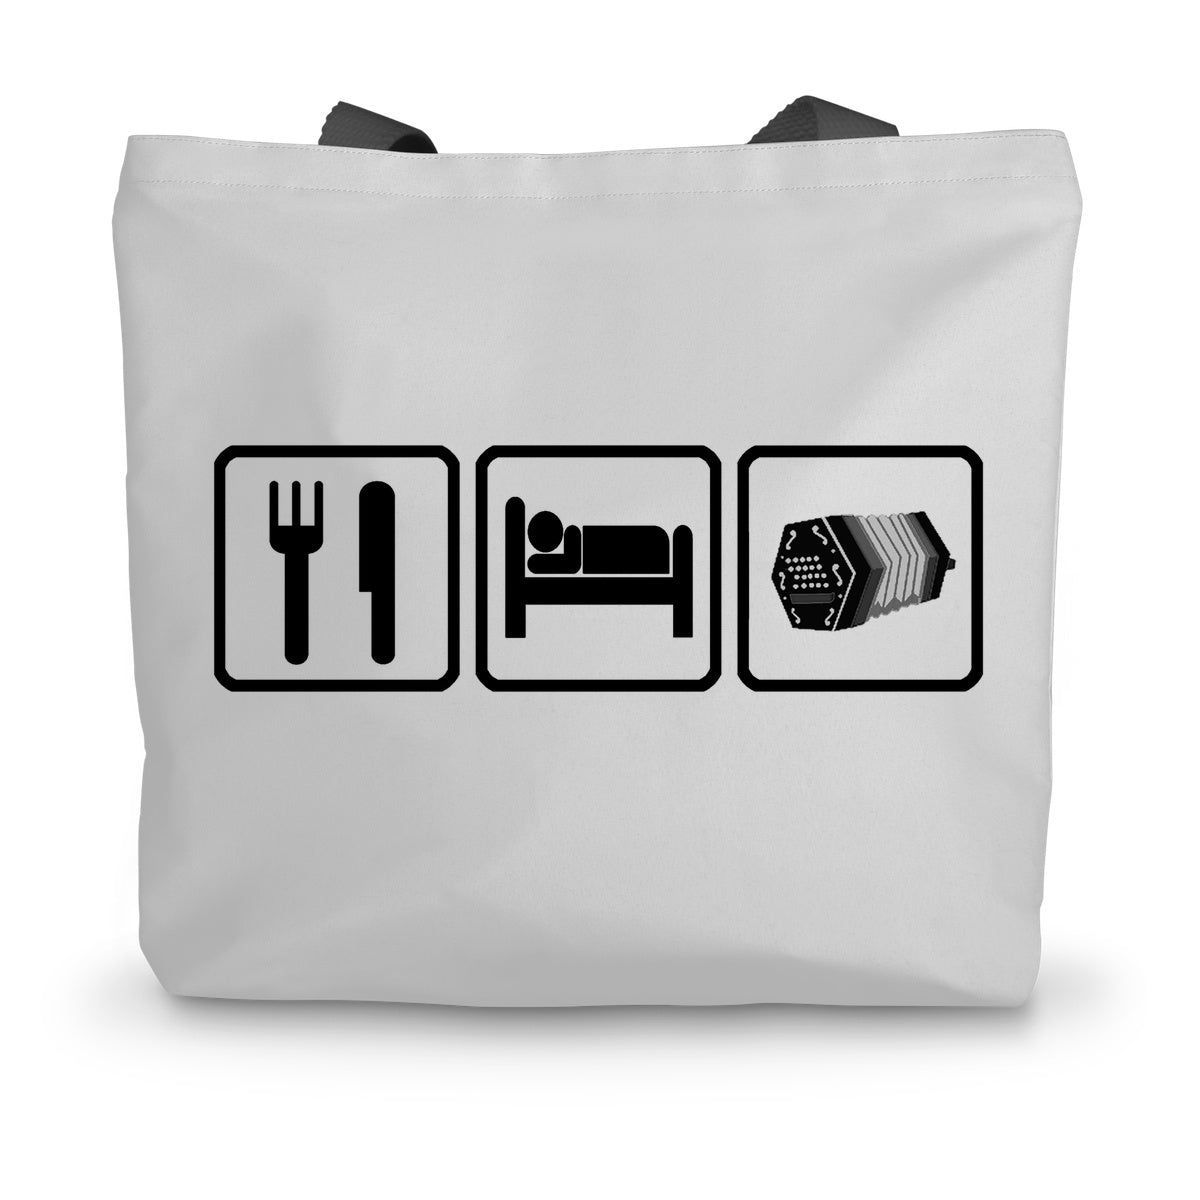 Eat Sleep & Play Concertina Canvas Tote Bag